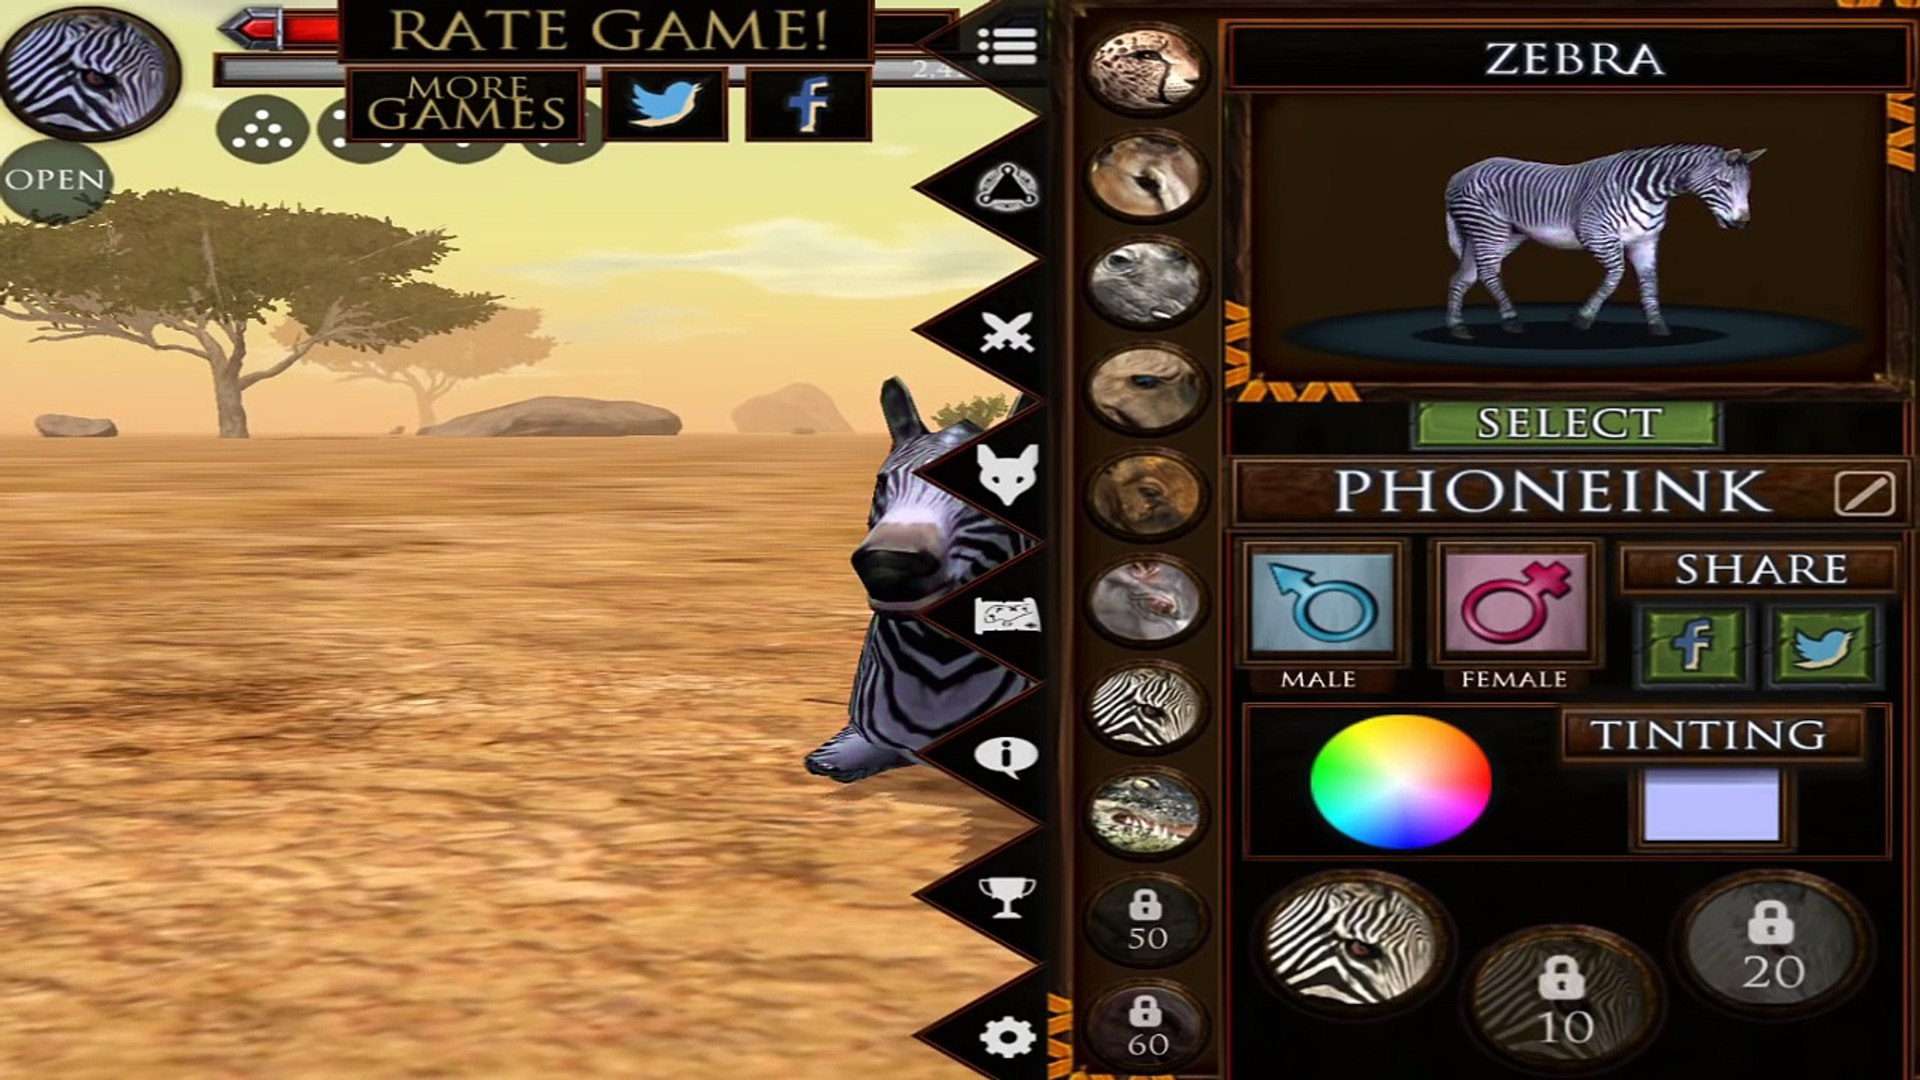 Ultimate Savanna Simulator - Zebra - Android/iOS - Gameplay Part 9